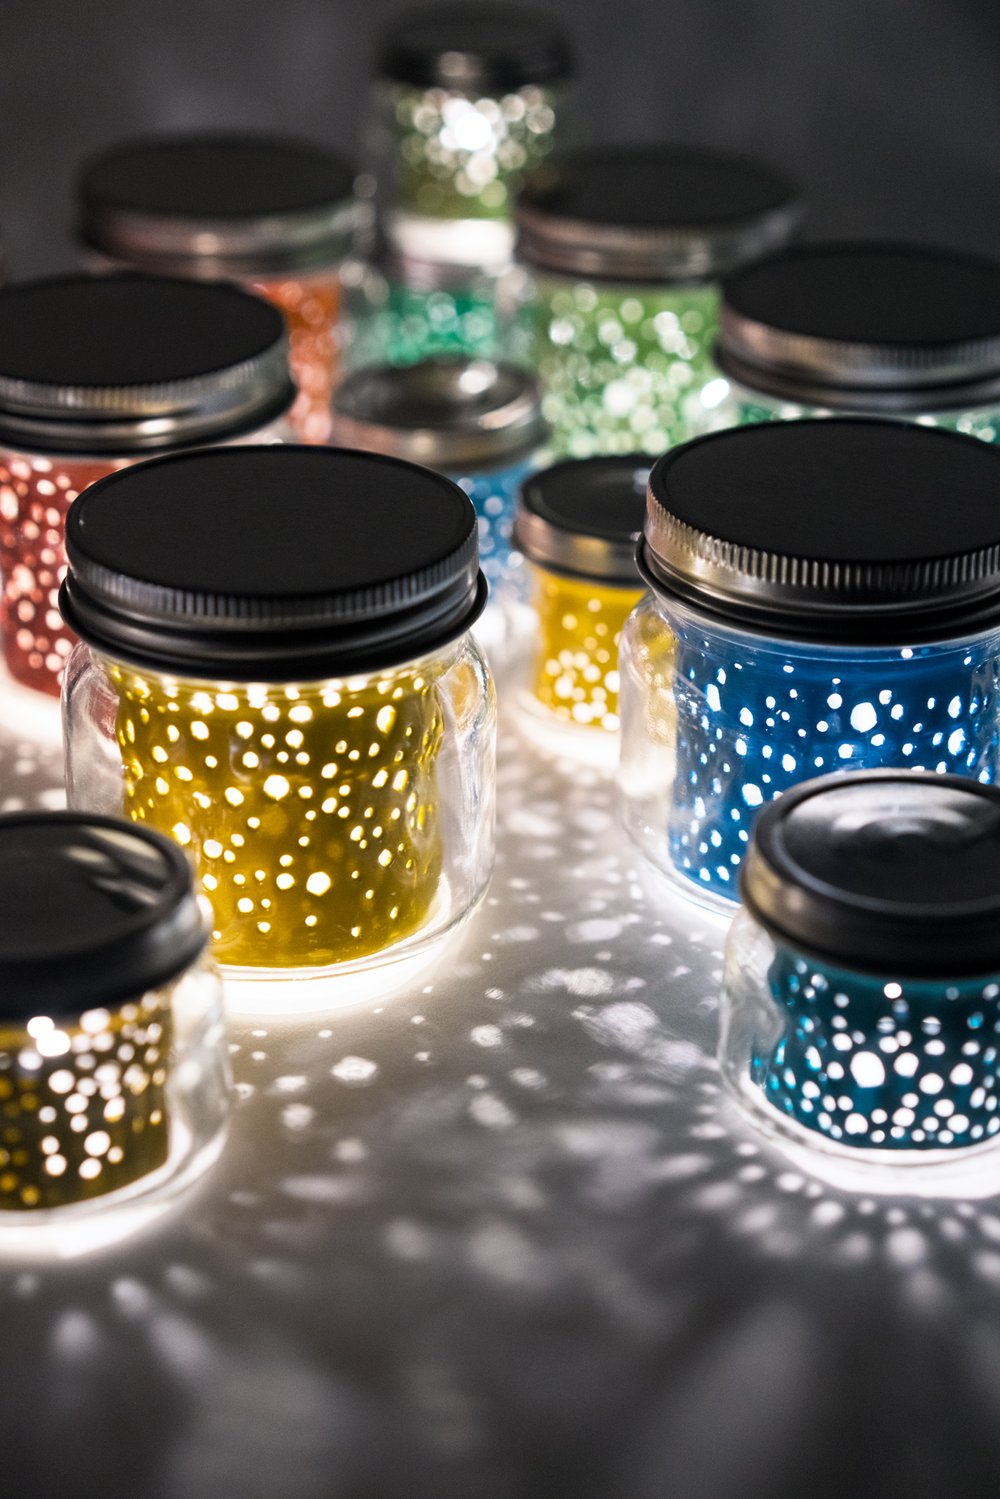 star jars - small — made by @heysp